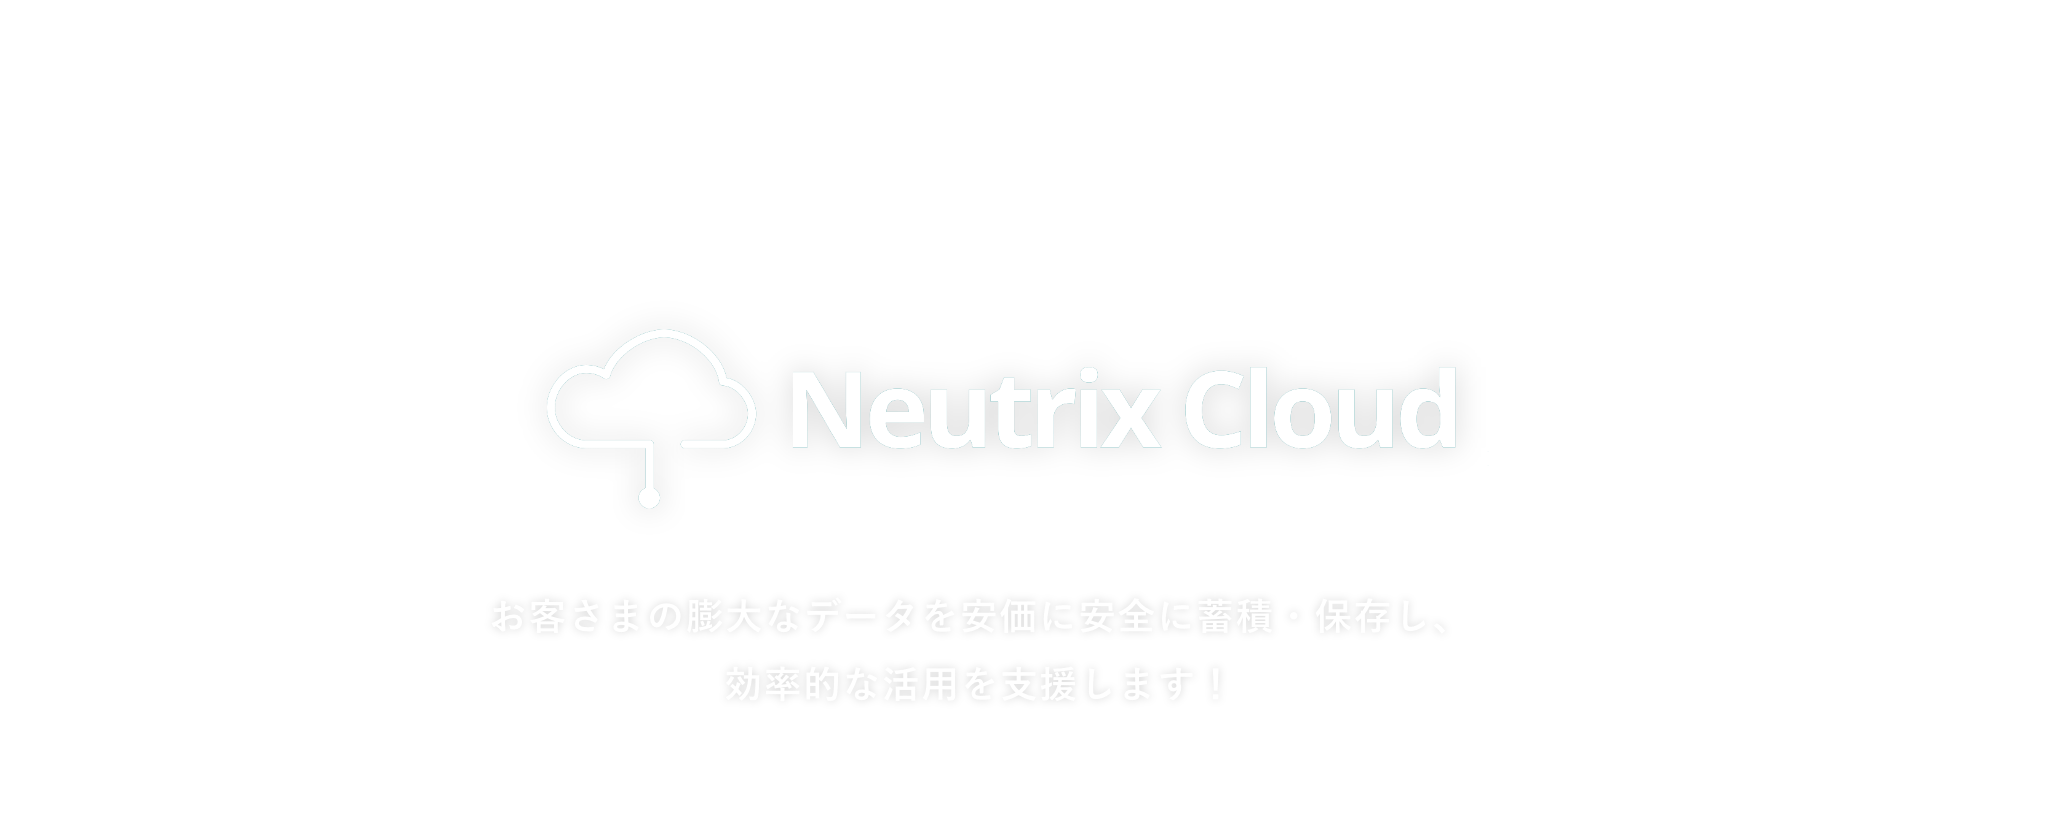 Neutrix Cloud